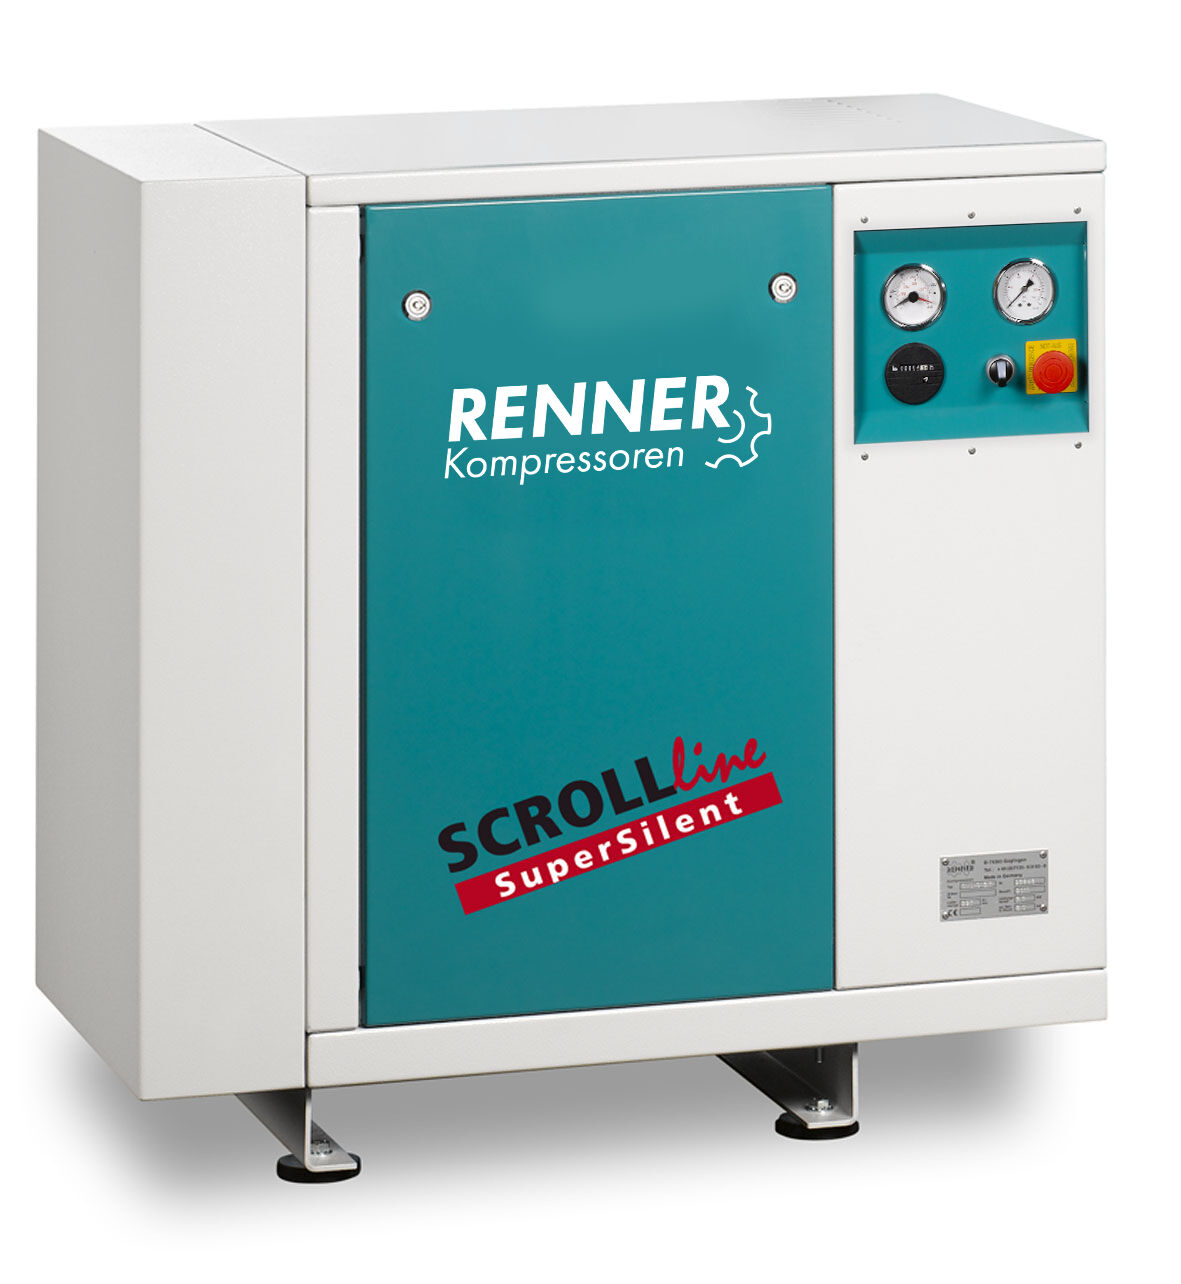 RENNER-Kompressor SL-S 1,5 - SuperSilent ölfreier Scrollkompressor